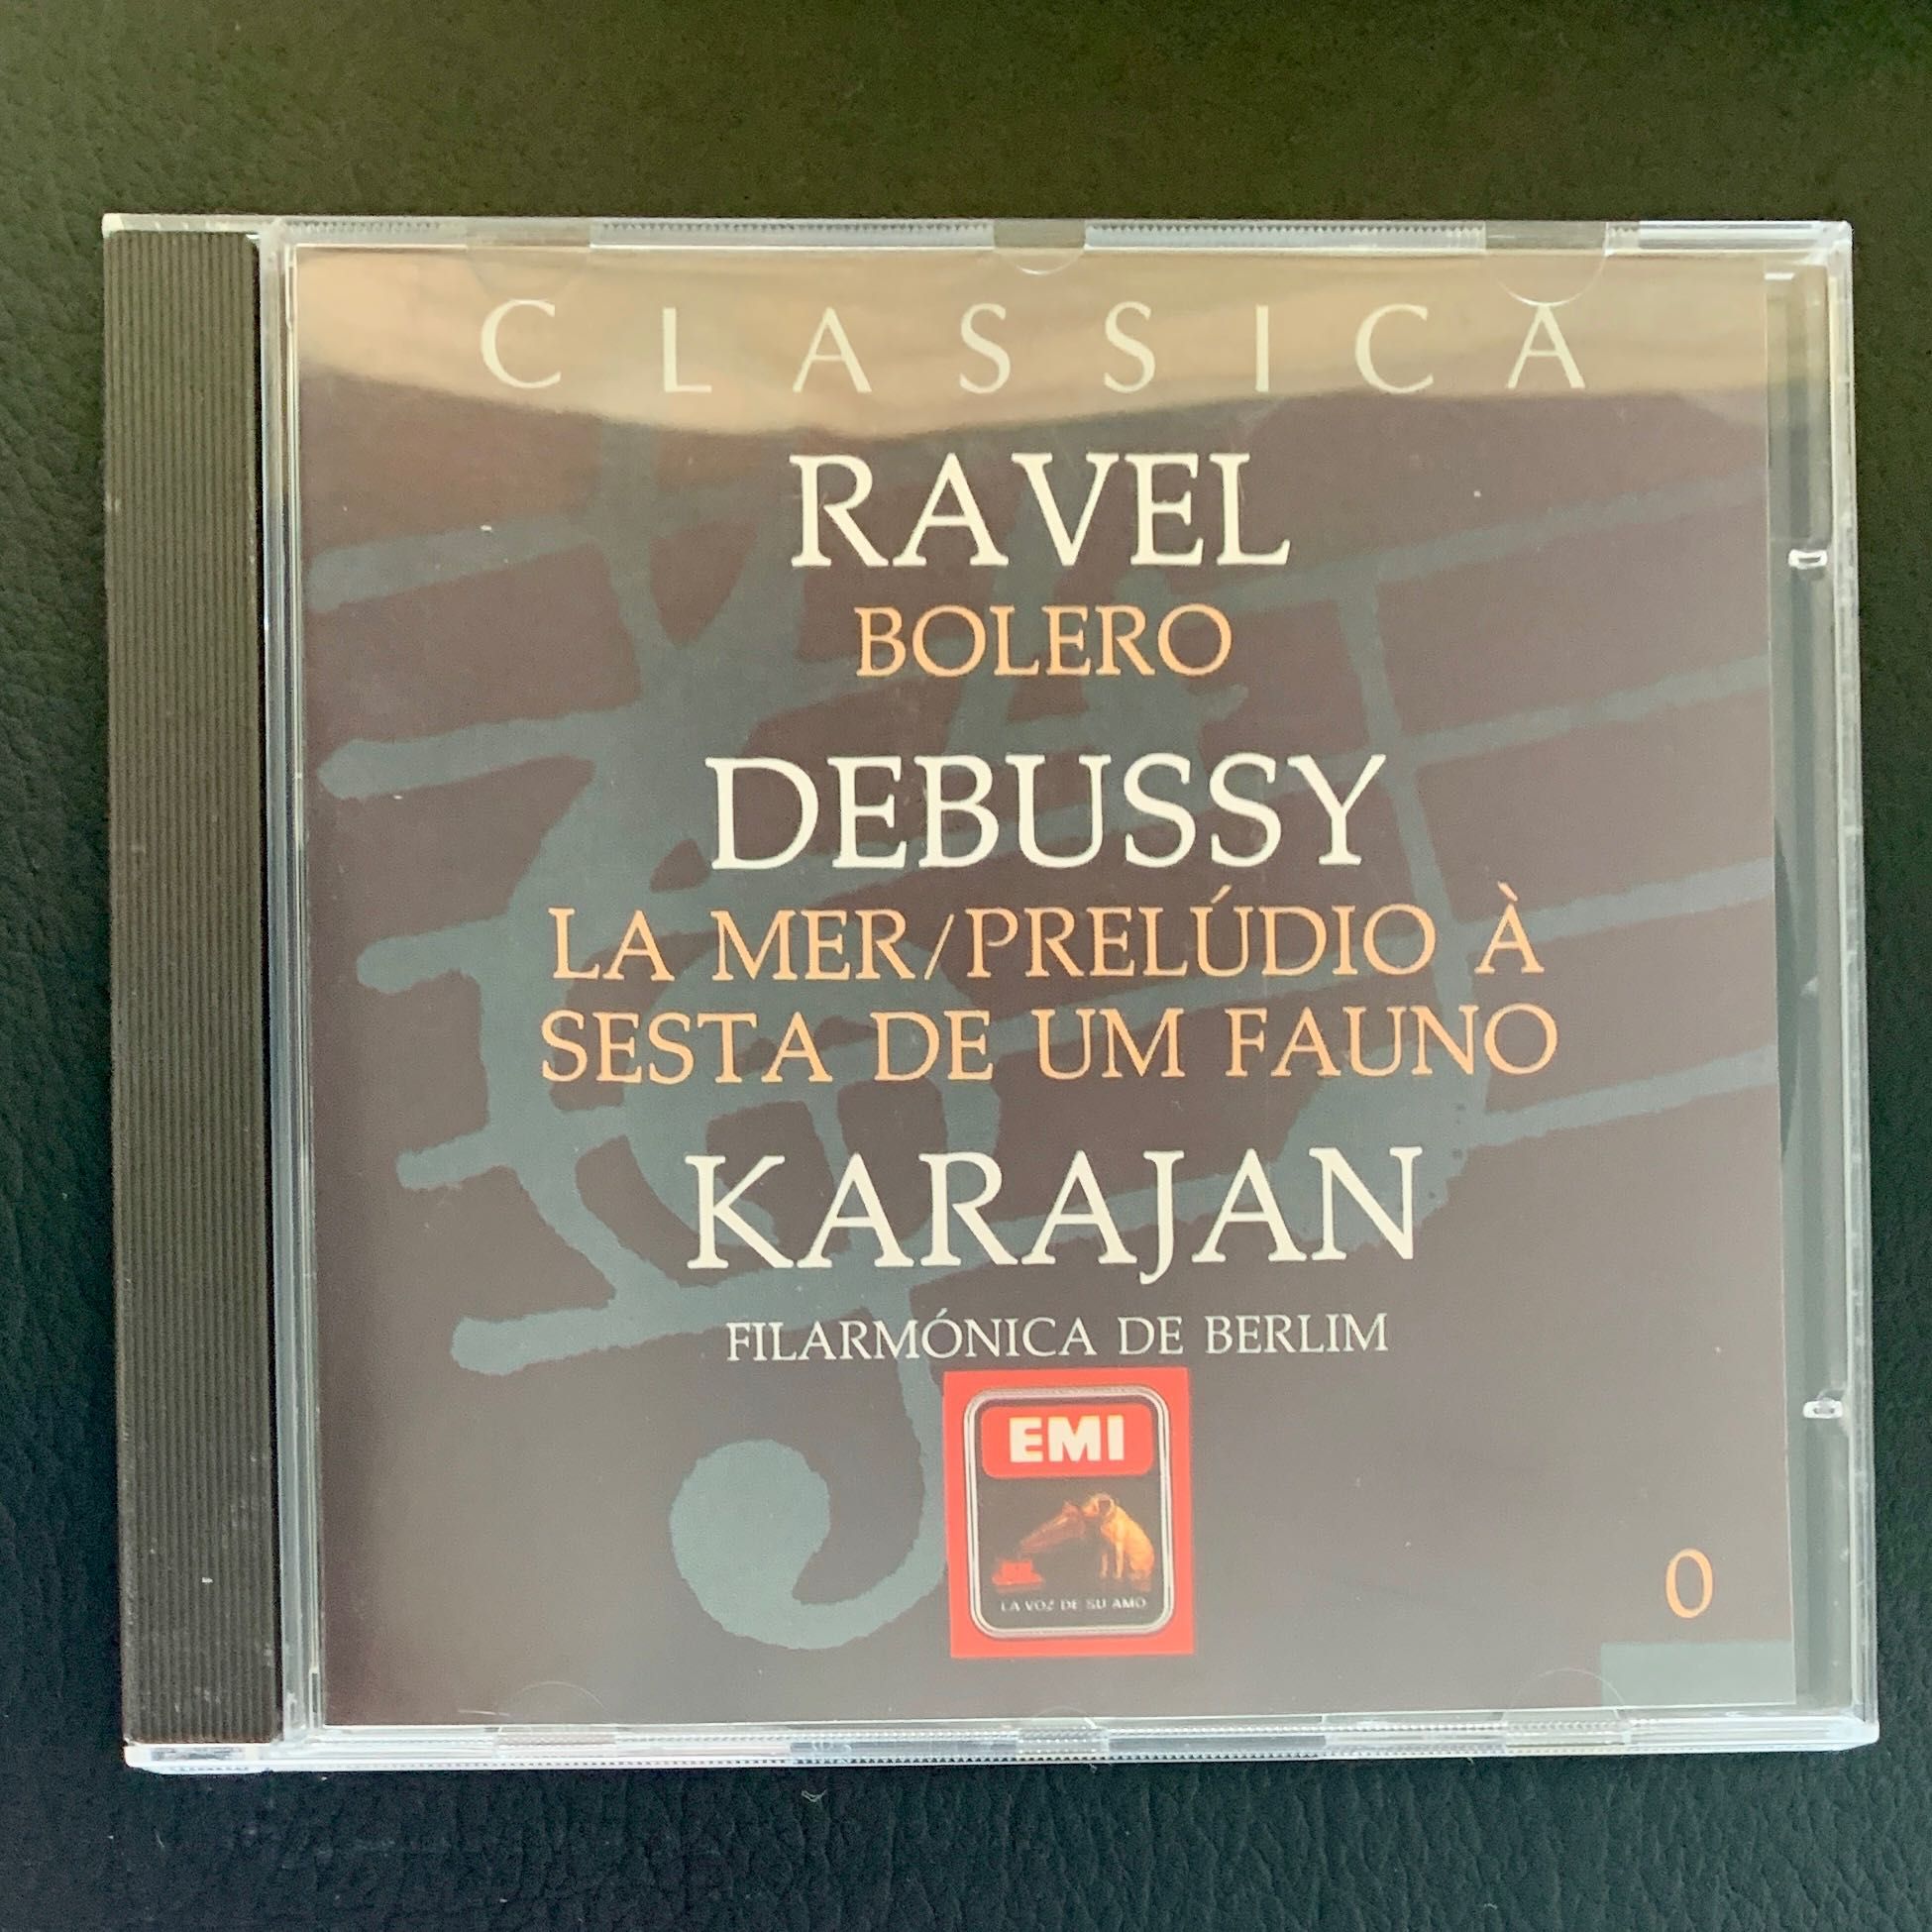 20. CDs música clássica: Rodrigo, Respighi, Ravel